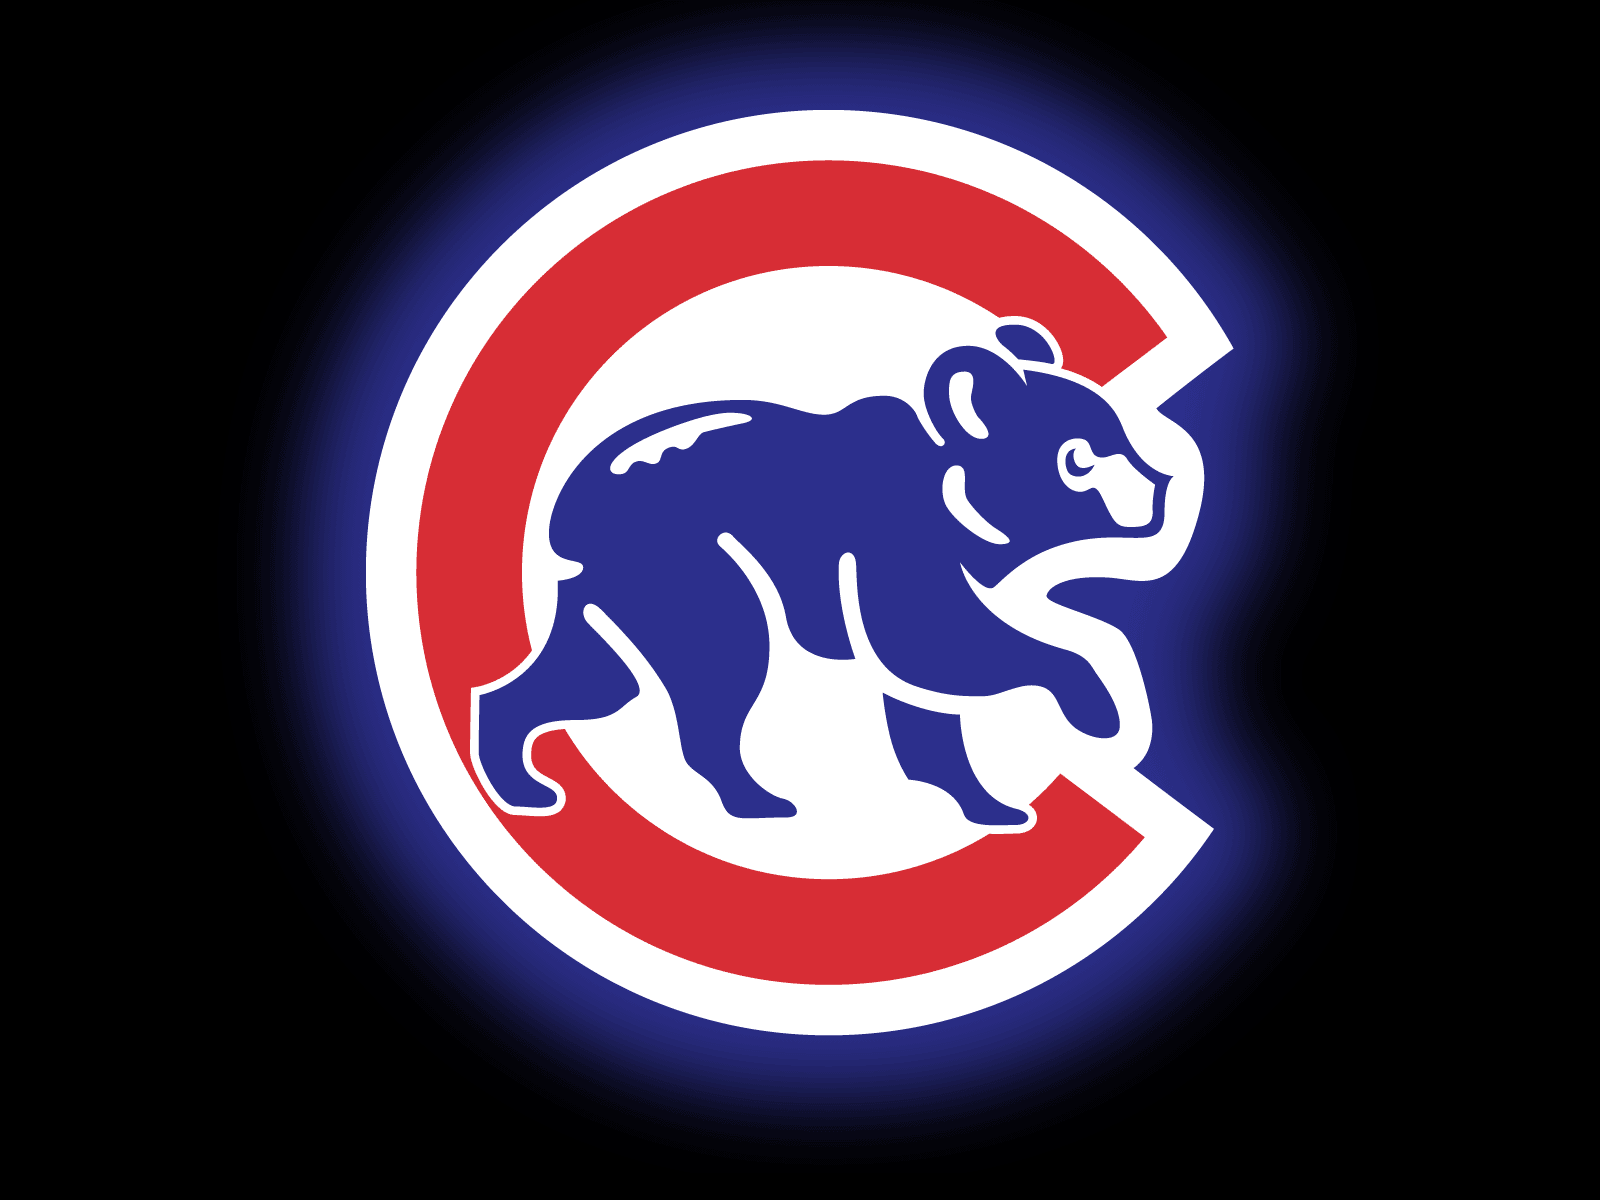 Chicago Cubs Mlb Baseball Wallpaper